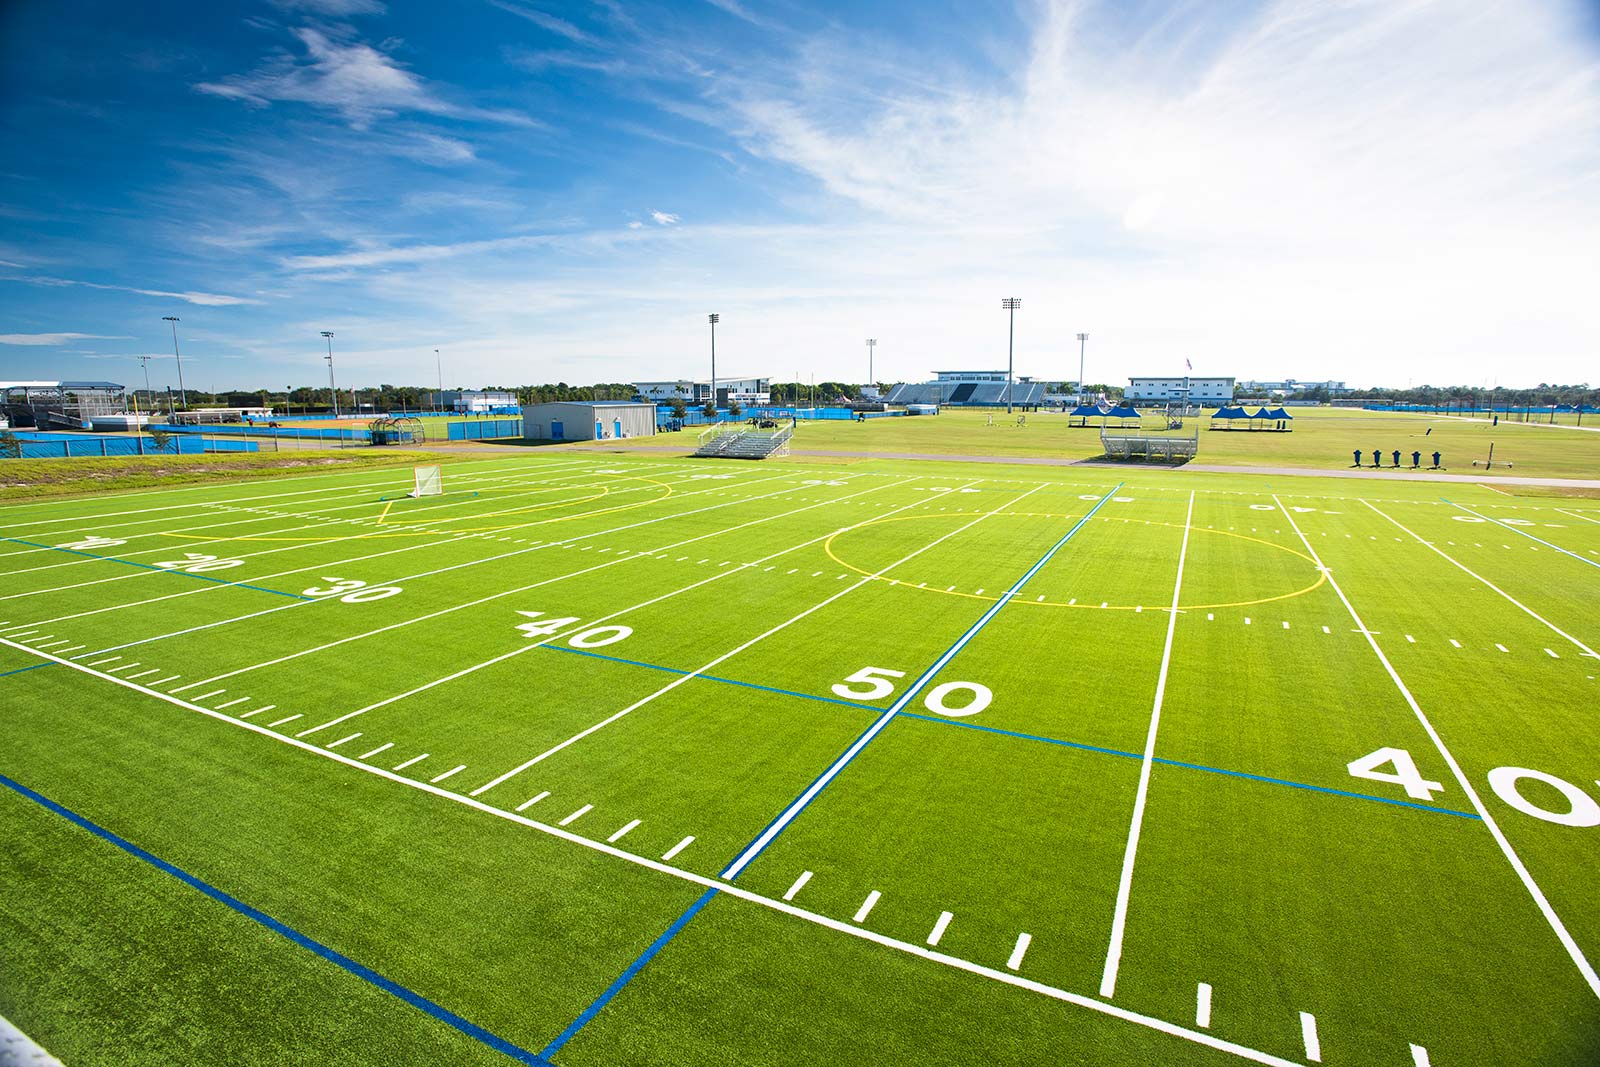 IMG Academy multi-sport complex